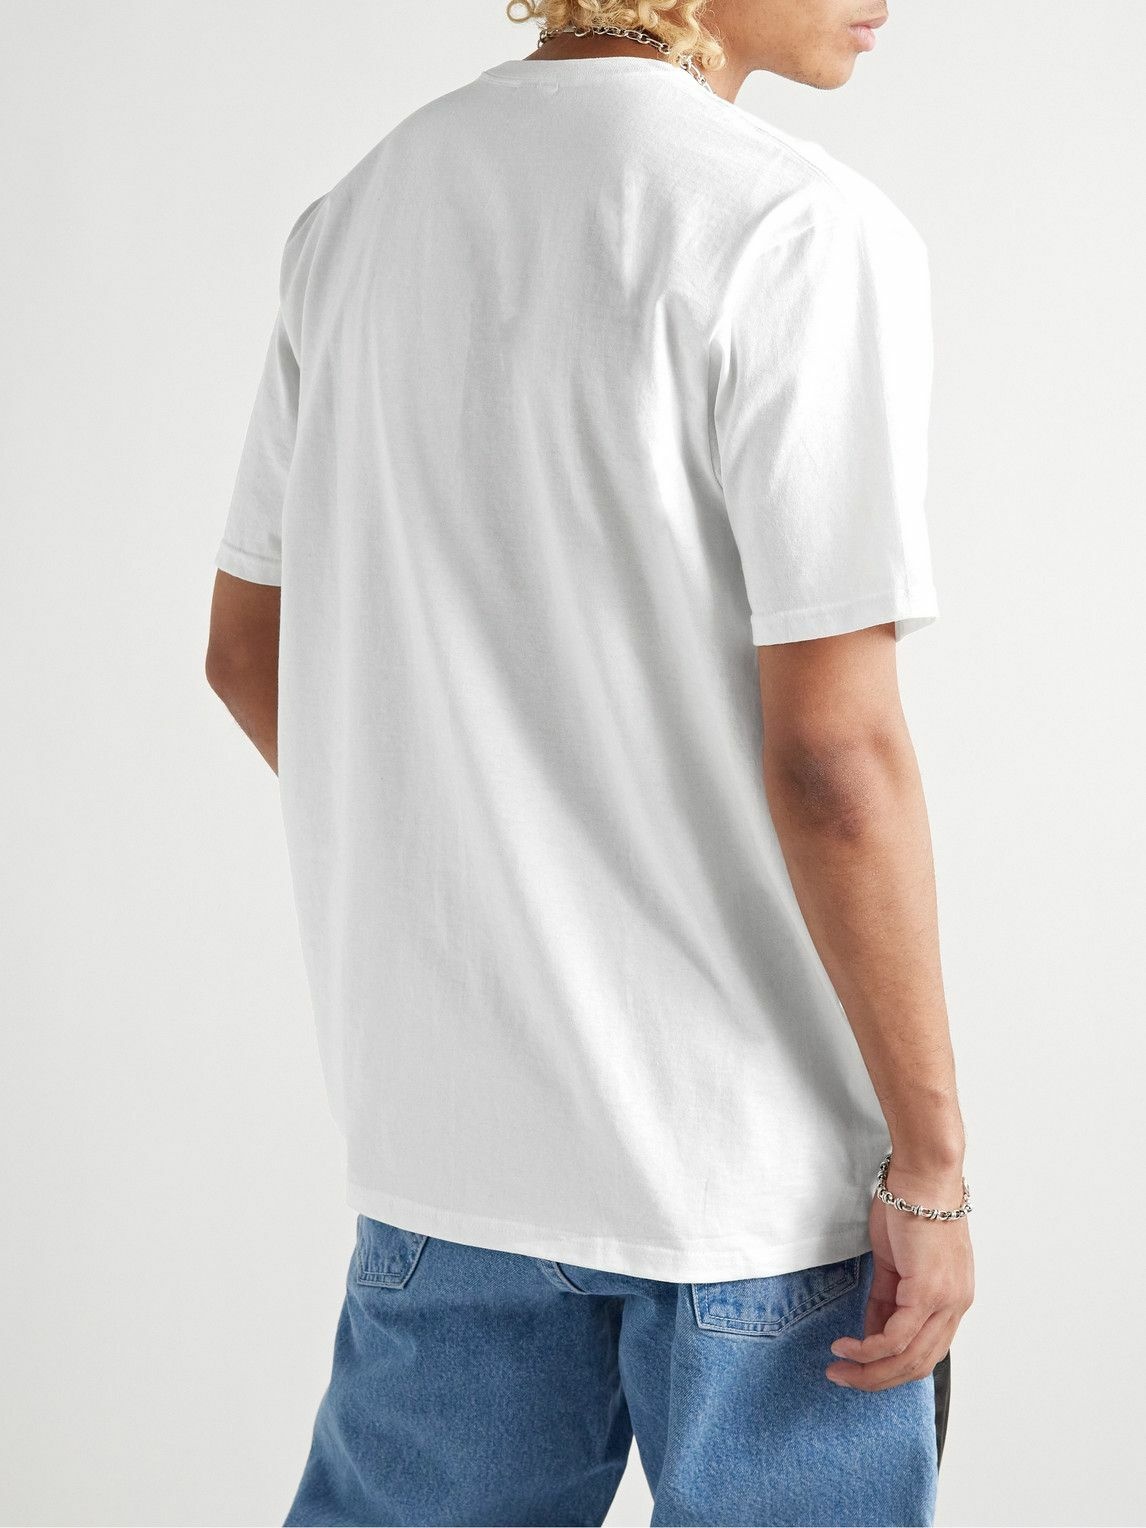 Stussy - Printed Cotton-Jersey T-Shirt - White Stussy